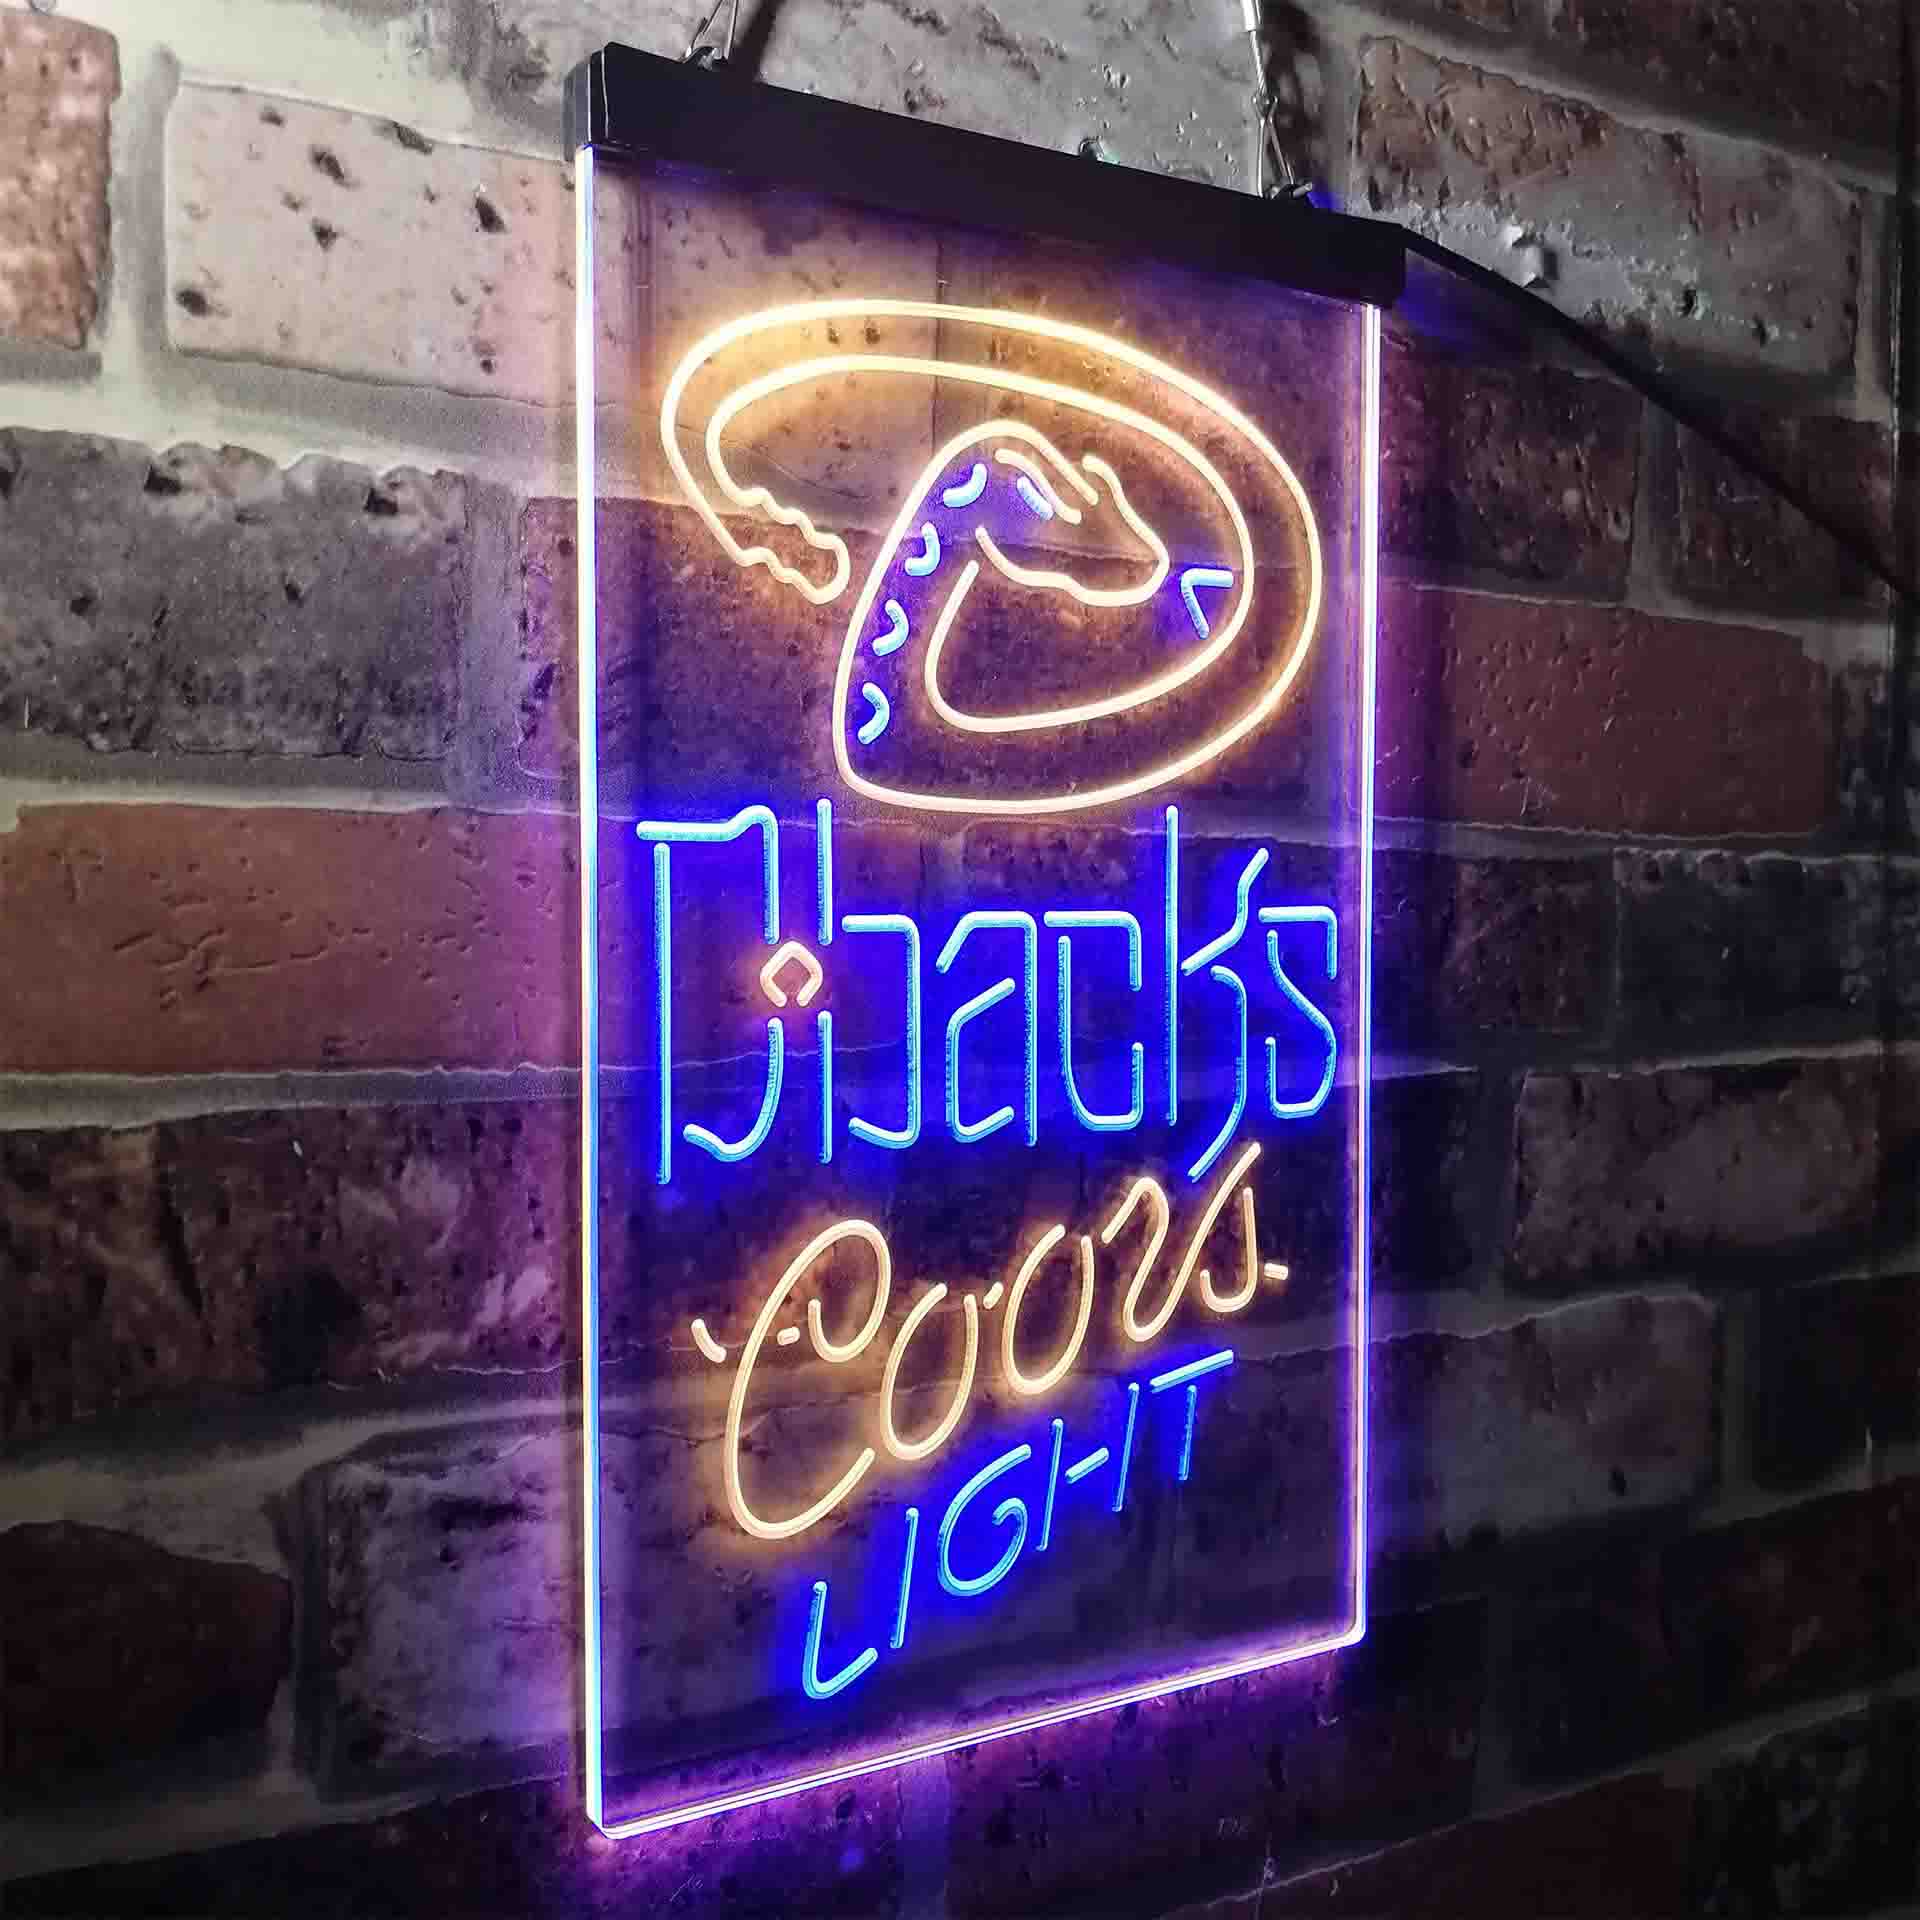 Arizona Diamondbacks Neon-Like LED Sign